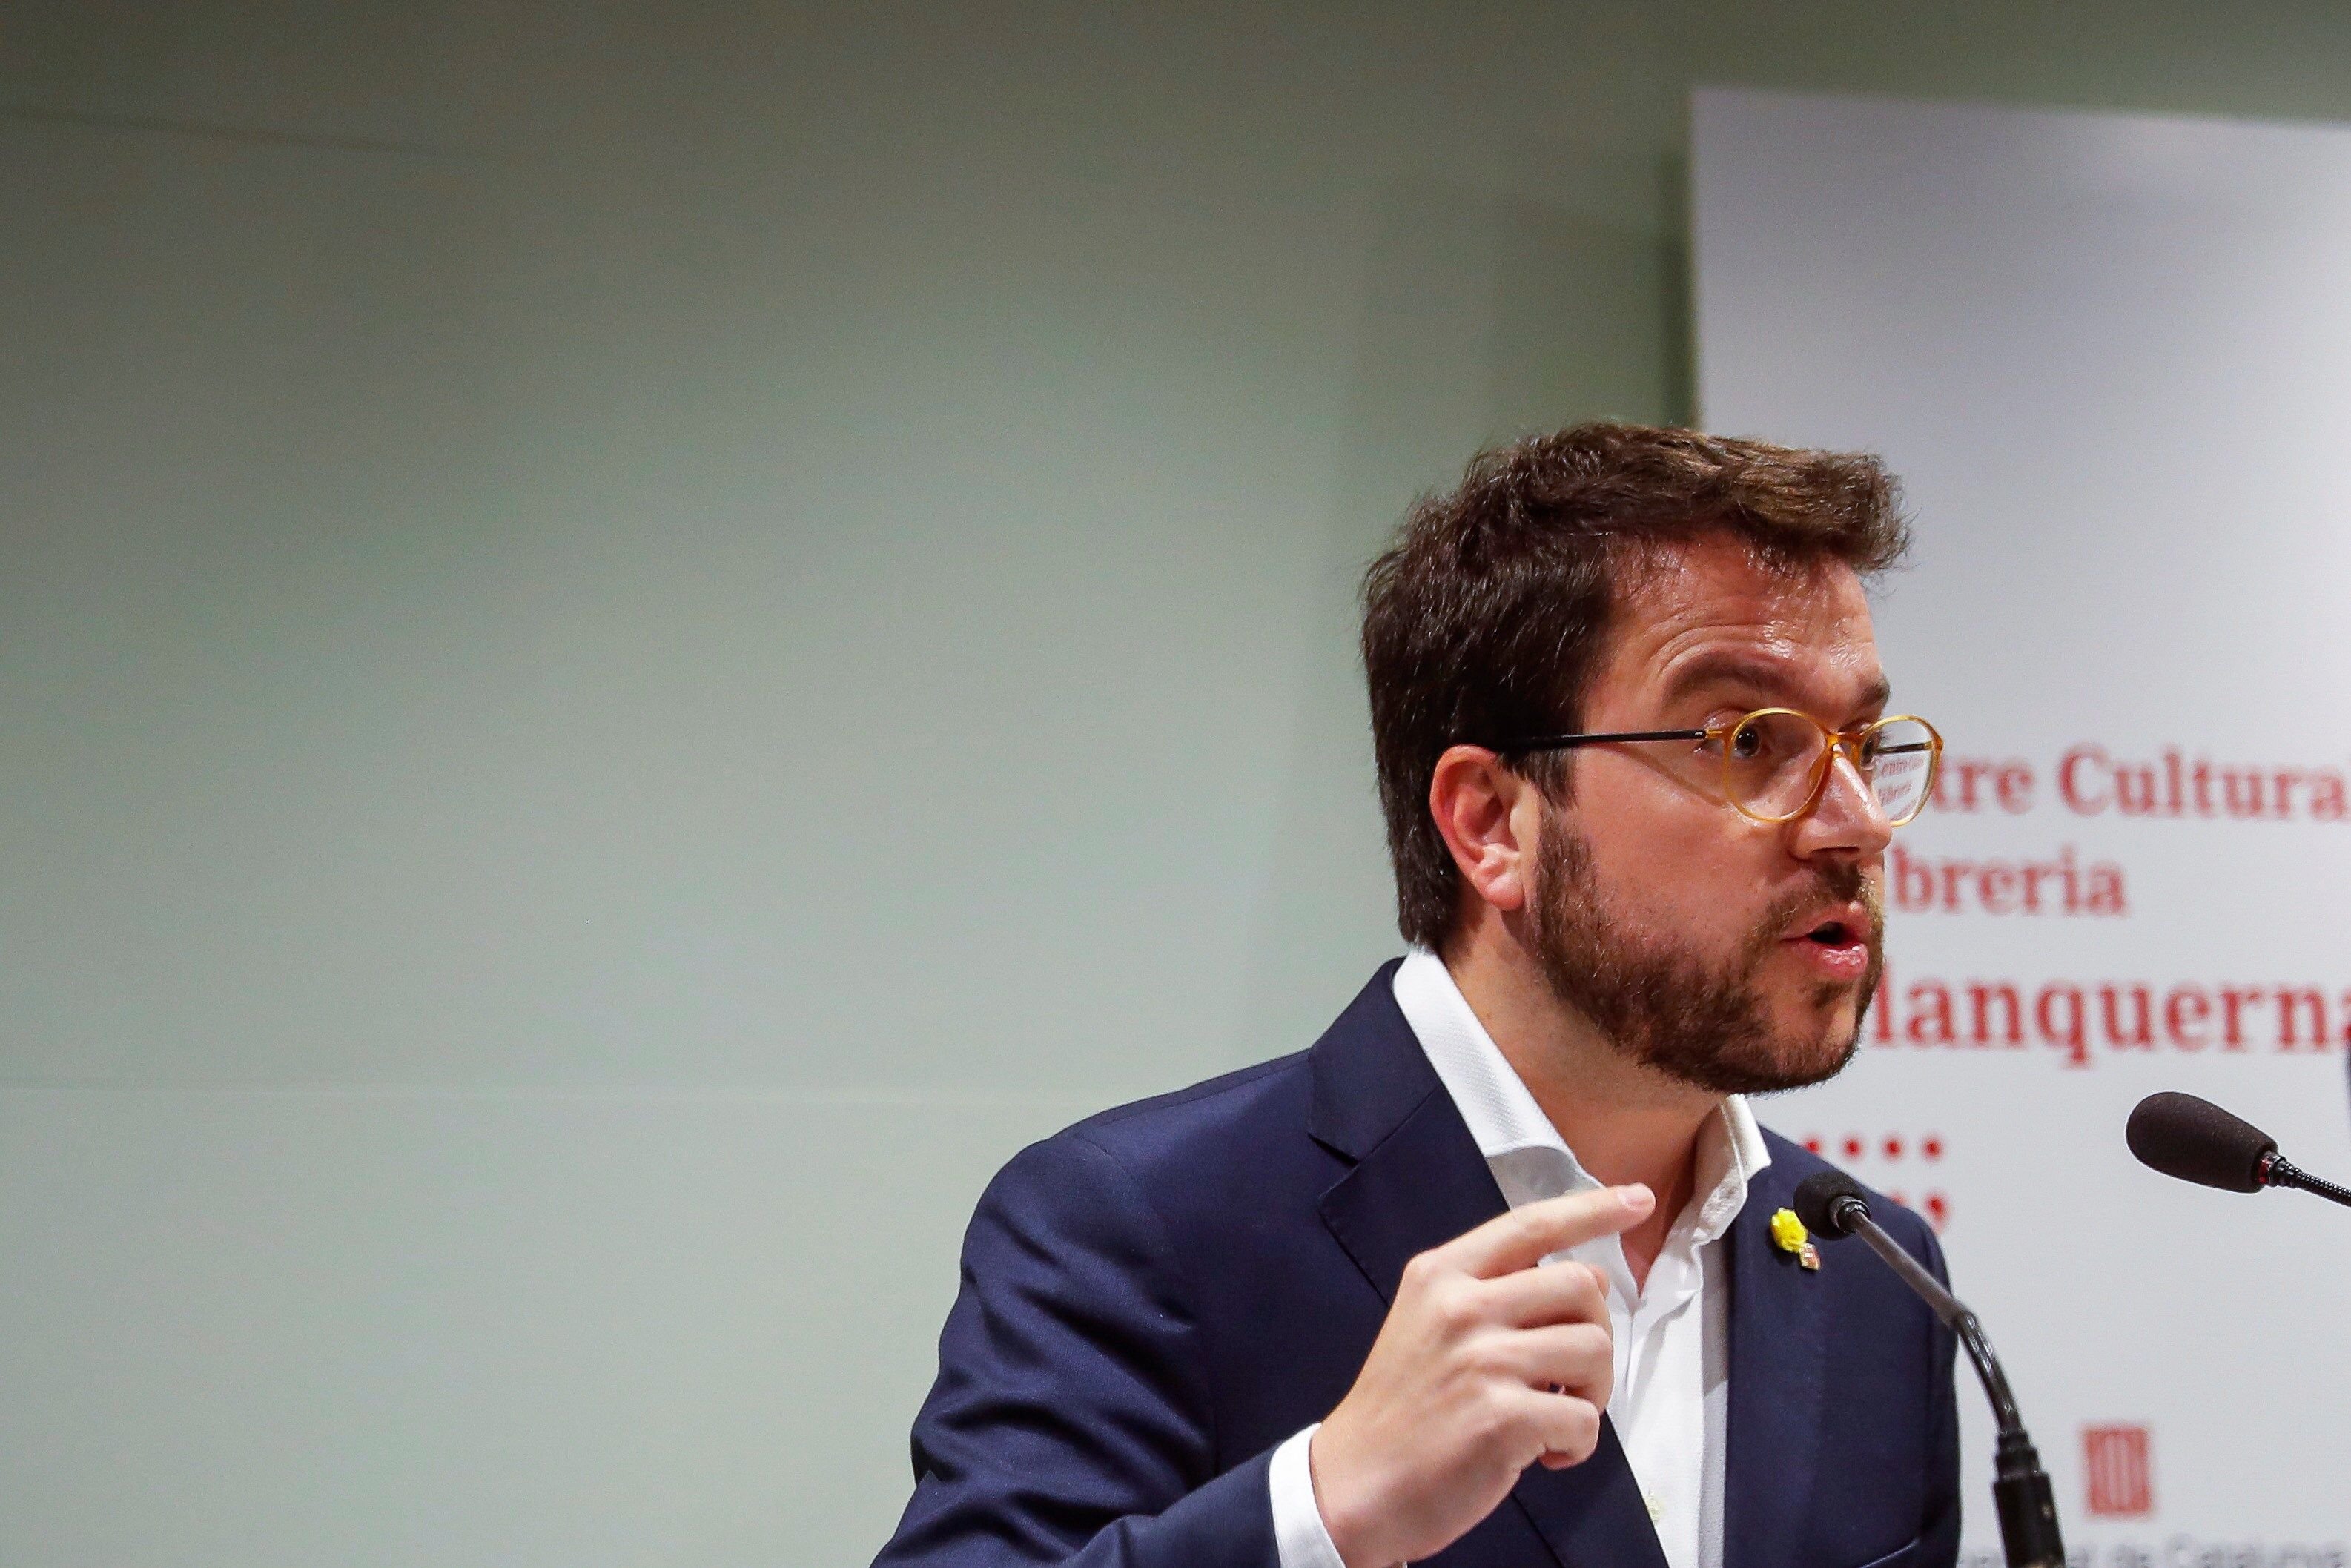 Aragonès exige a Sánchez que supere la "parálisis política" y dialogue